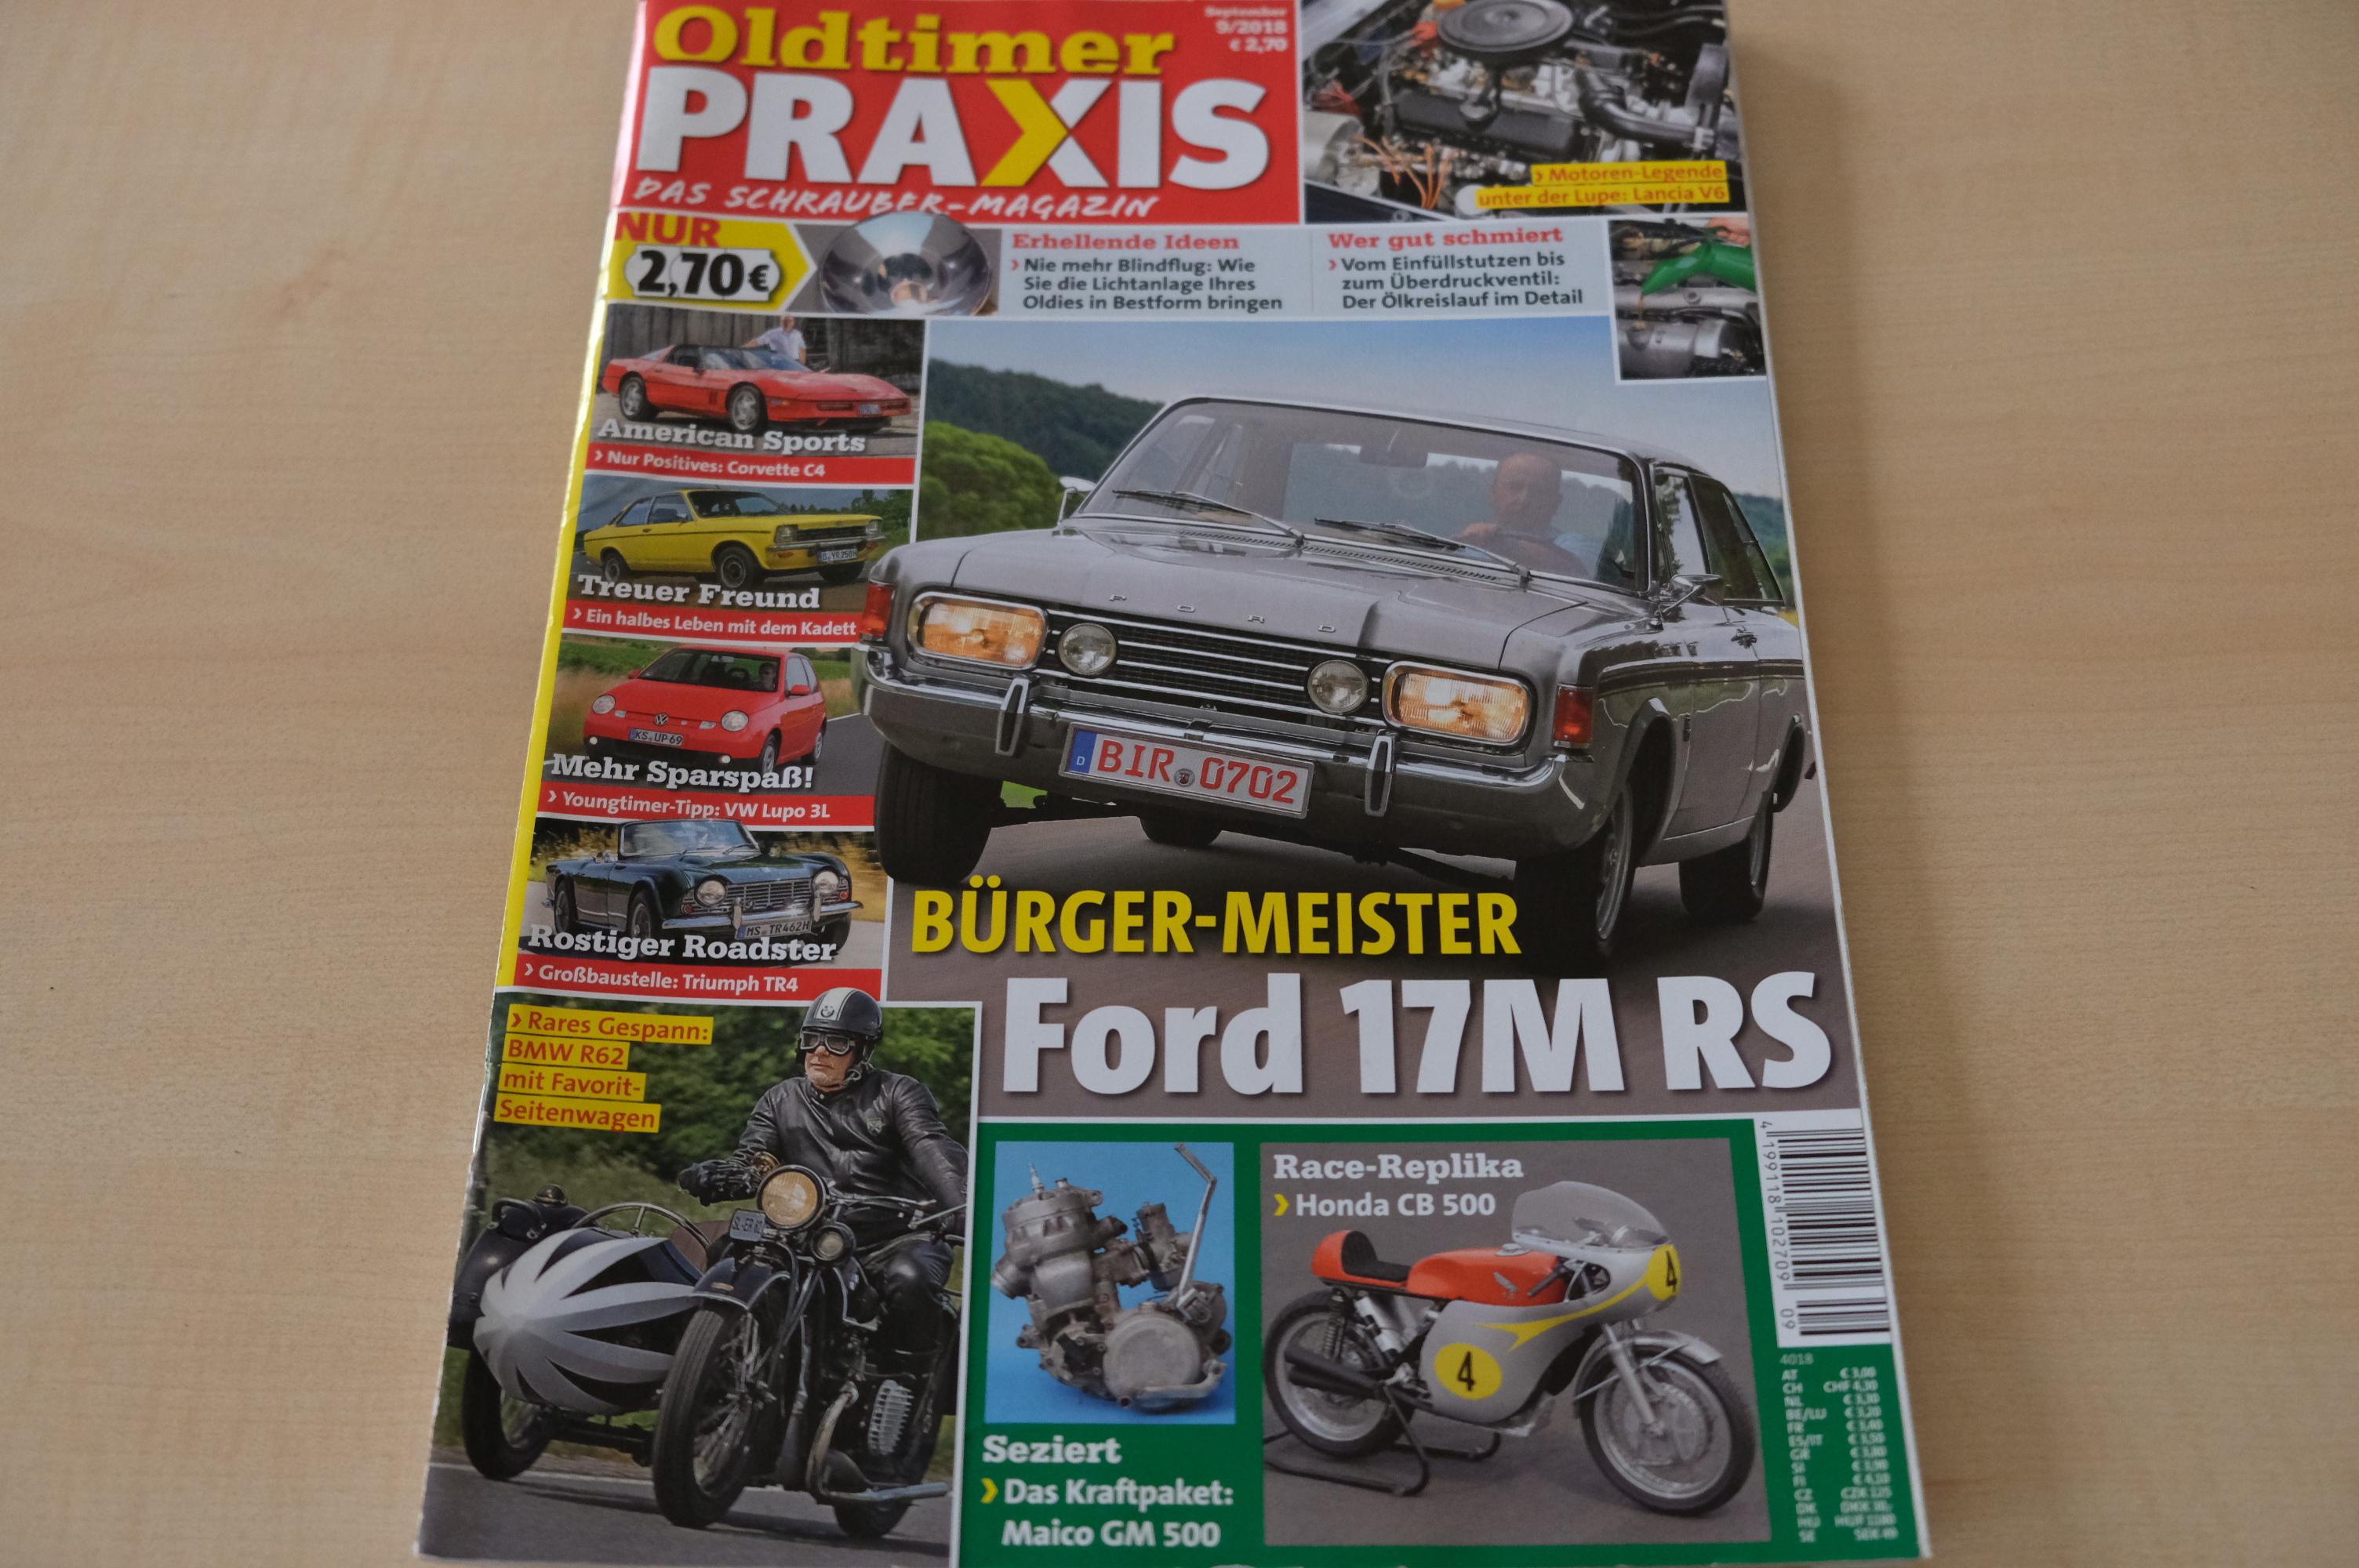 Deckblatt Oldtimer Praxis (09/2018)